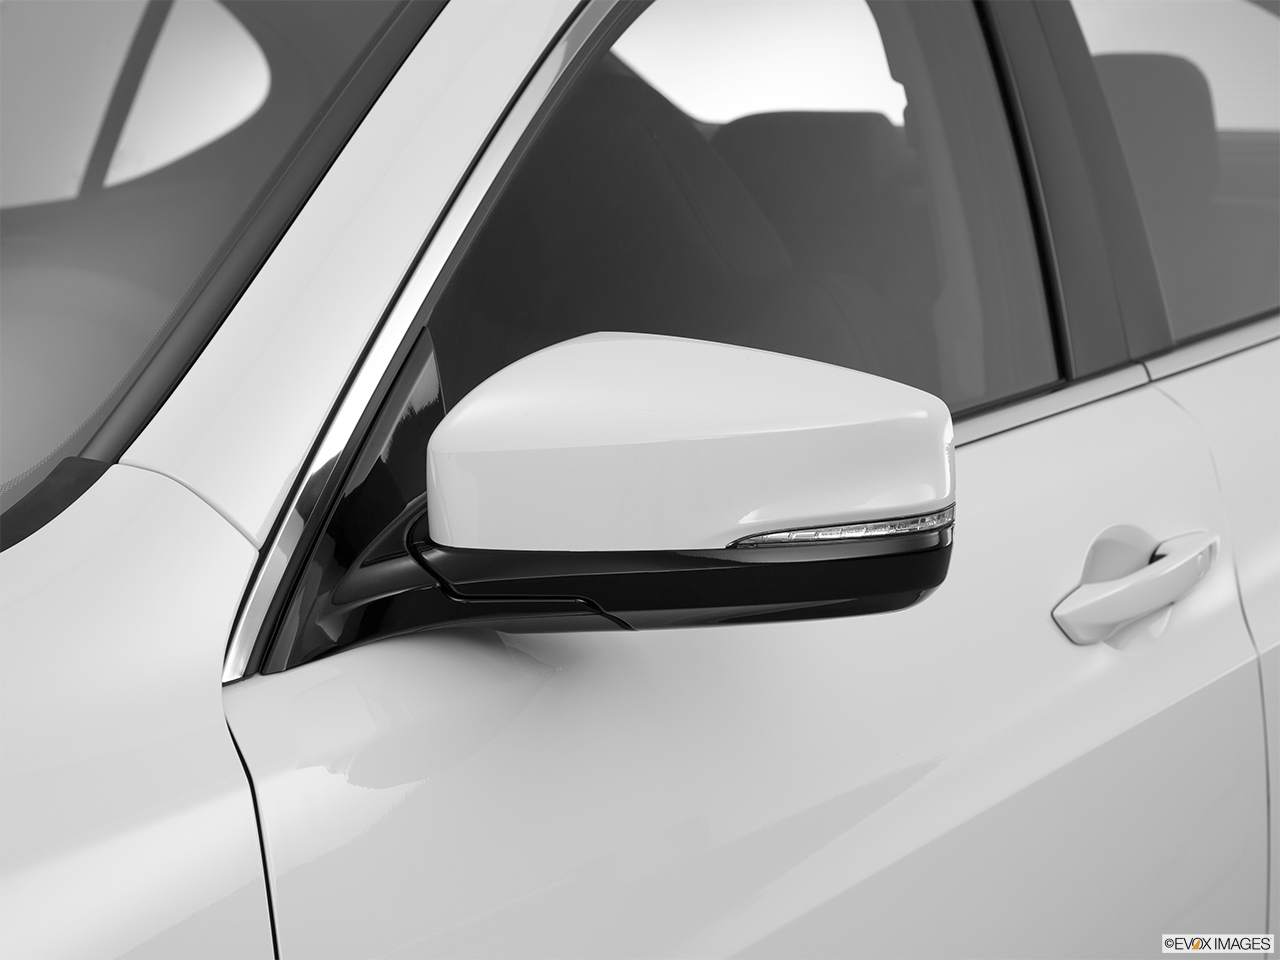 2015 Acura TLX 3.5 V-6 9-AT SH-AWD Driver's side mirror, 3_4 rear 